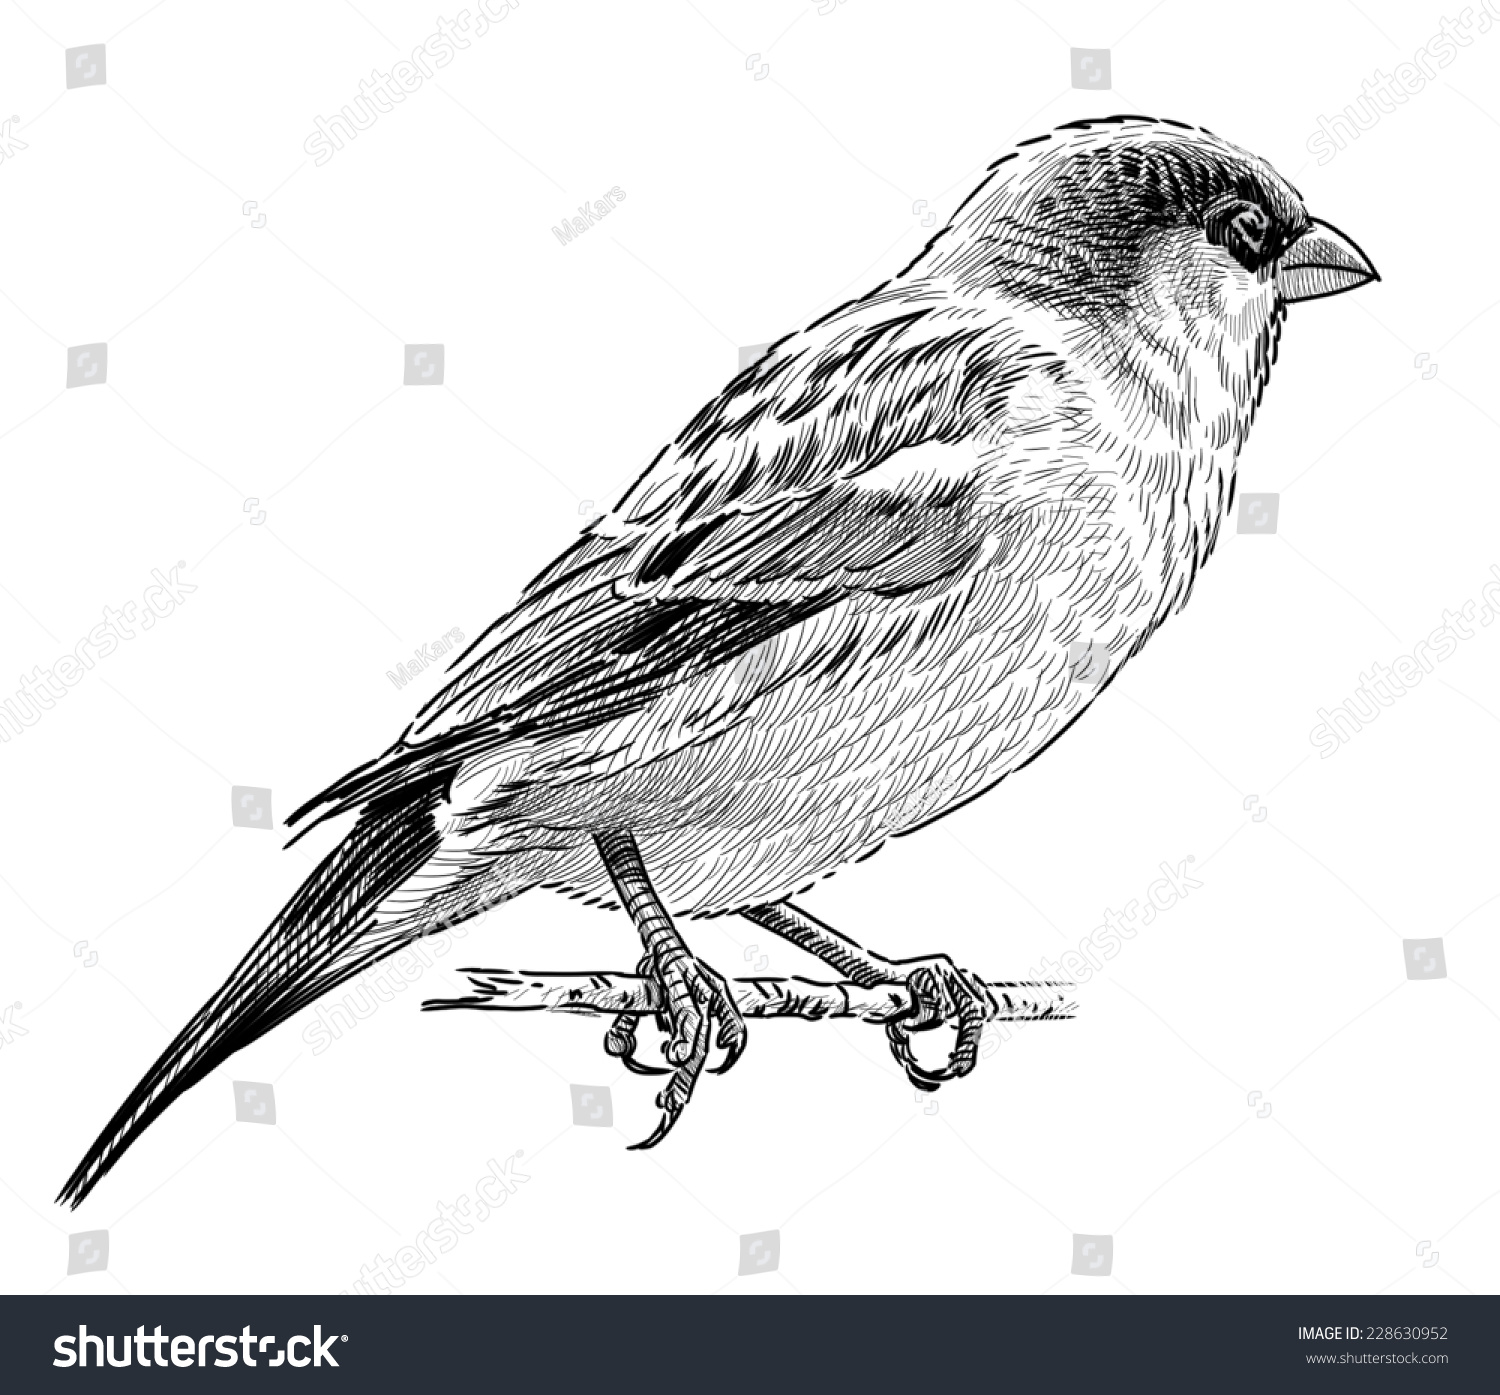 Sparrow On Branch Stock Illustration 228630952 - Shutterstock